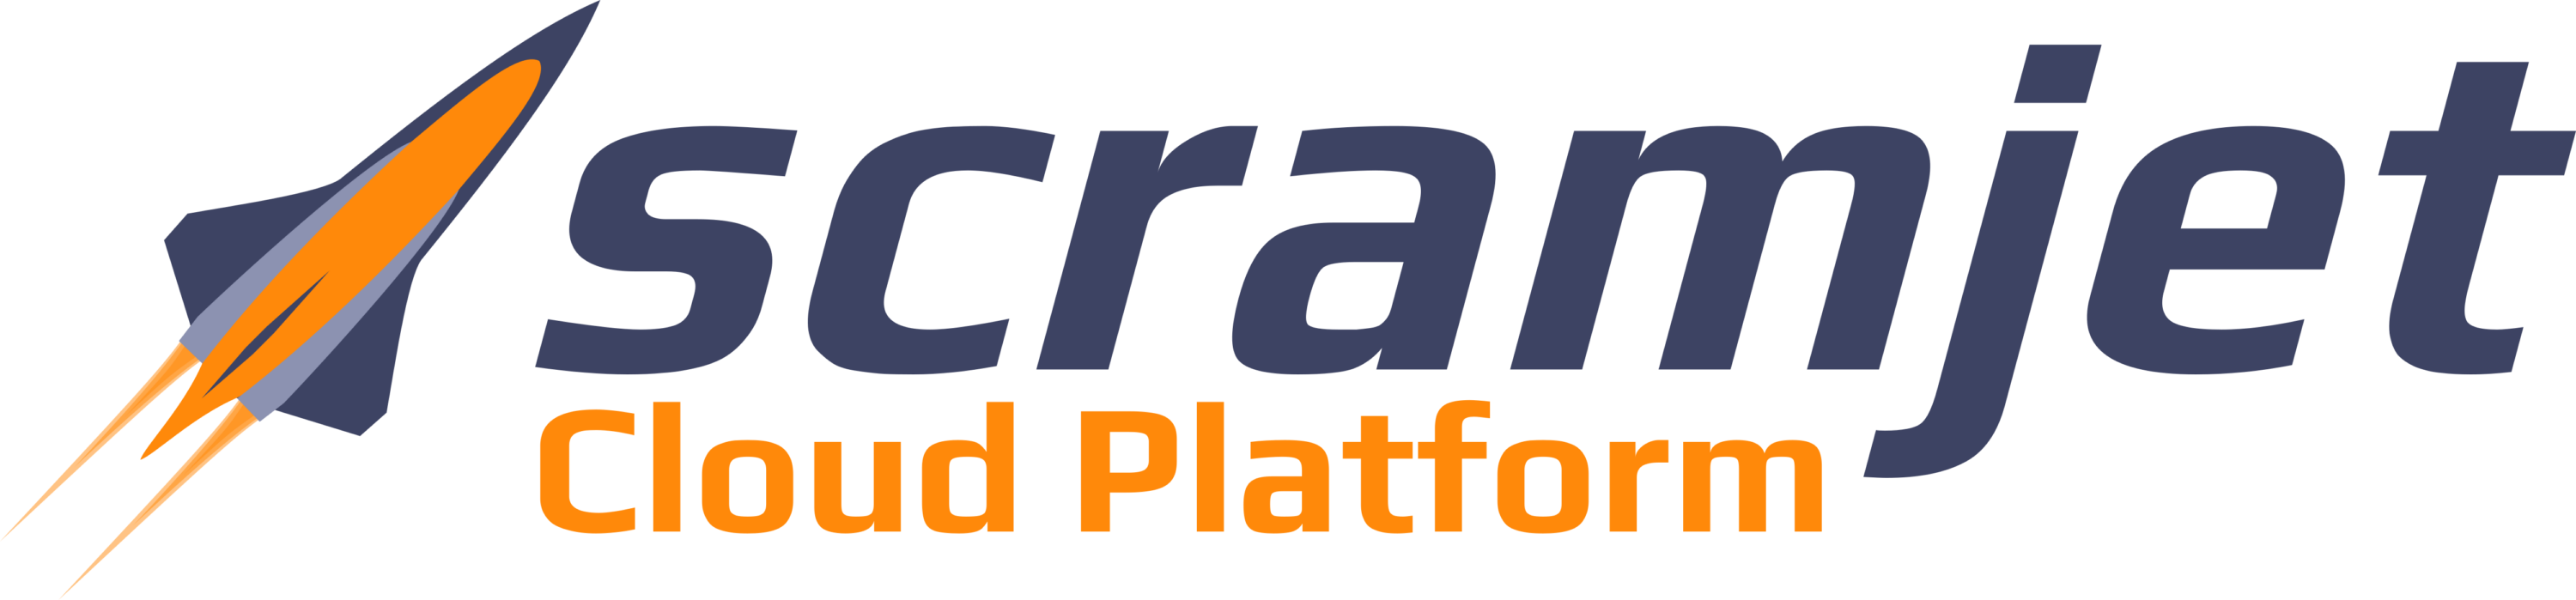 Scramjet Cloud Platform Logo